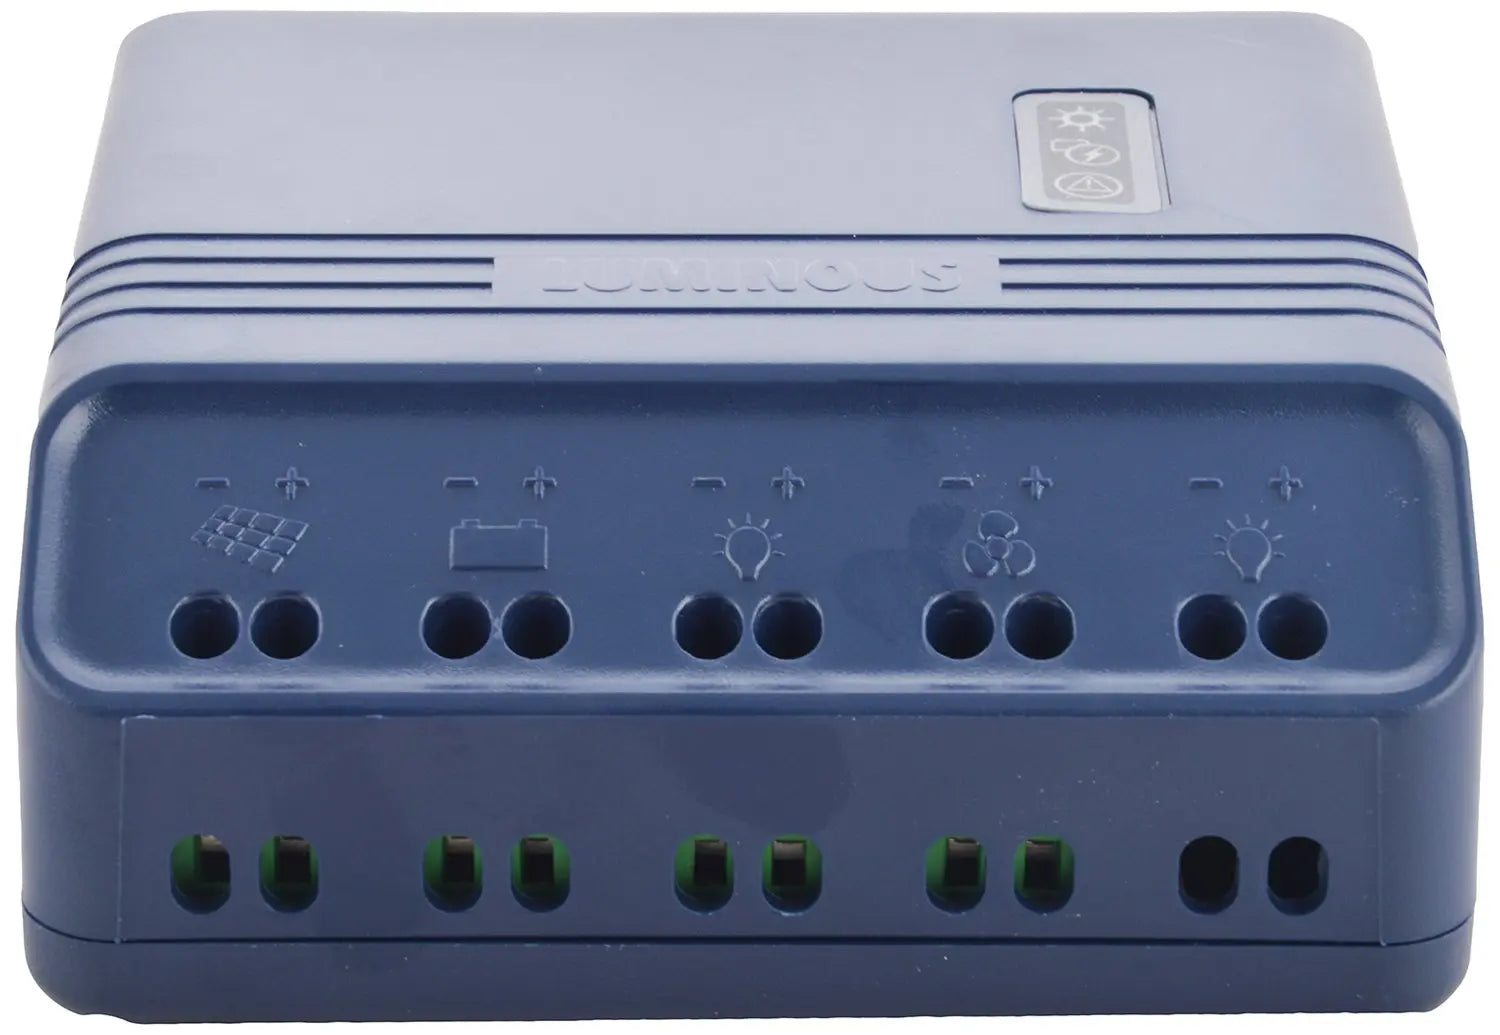 Luminous Solar Charge Controller 20 Amp - Blue, SCC1220 with USB port - Apollo Universe